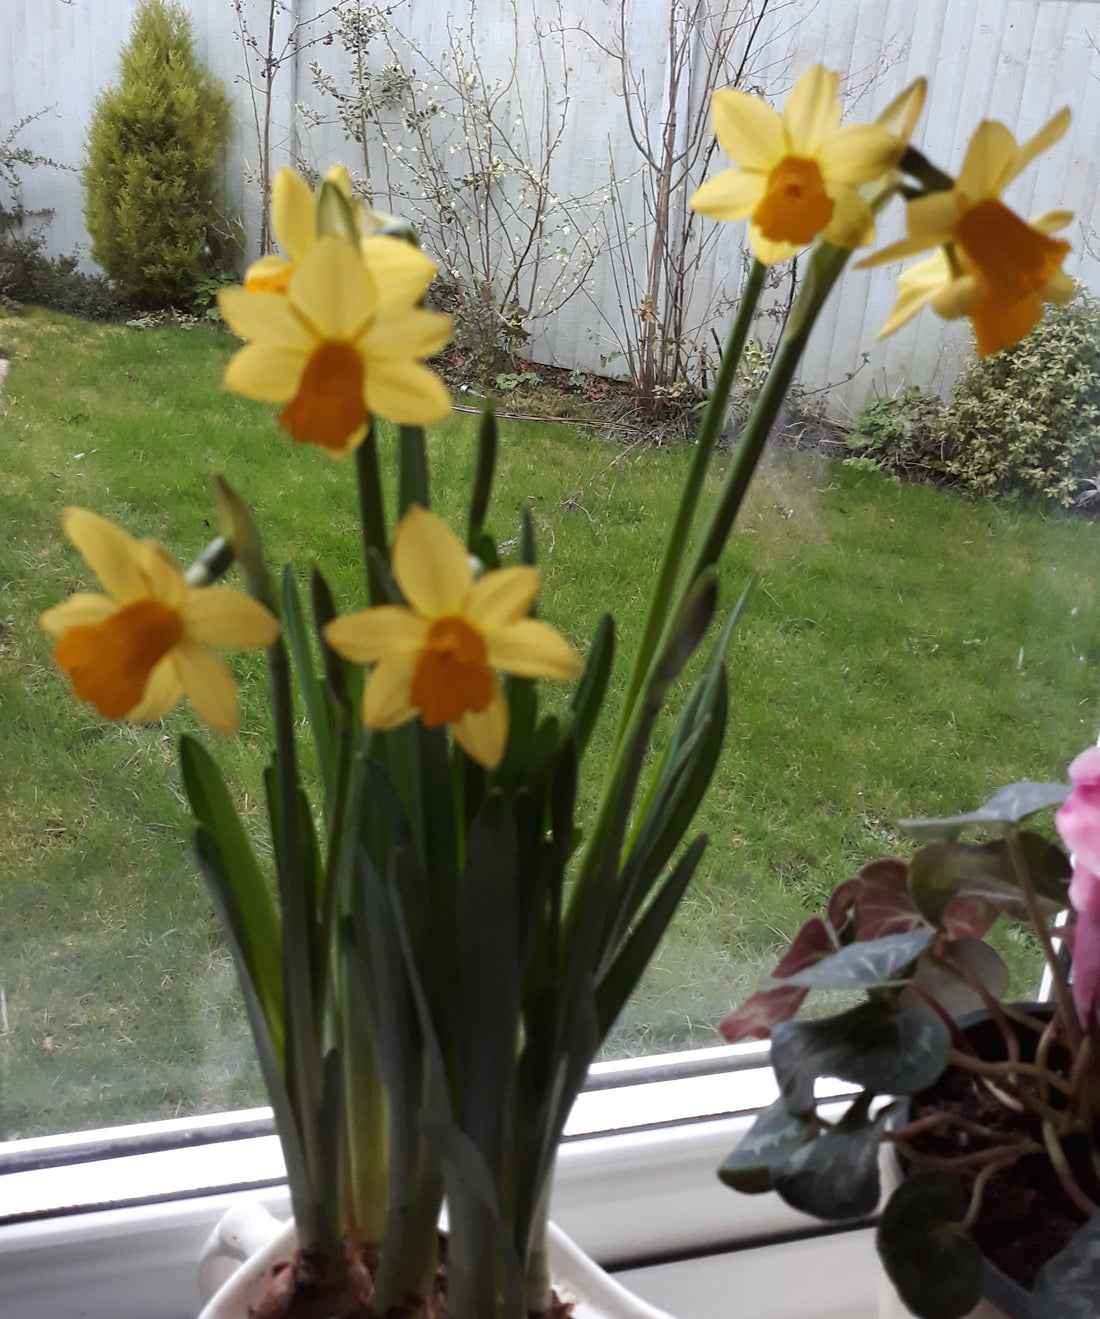 daffodils on windowsill, yellow petals with orange corona